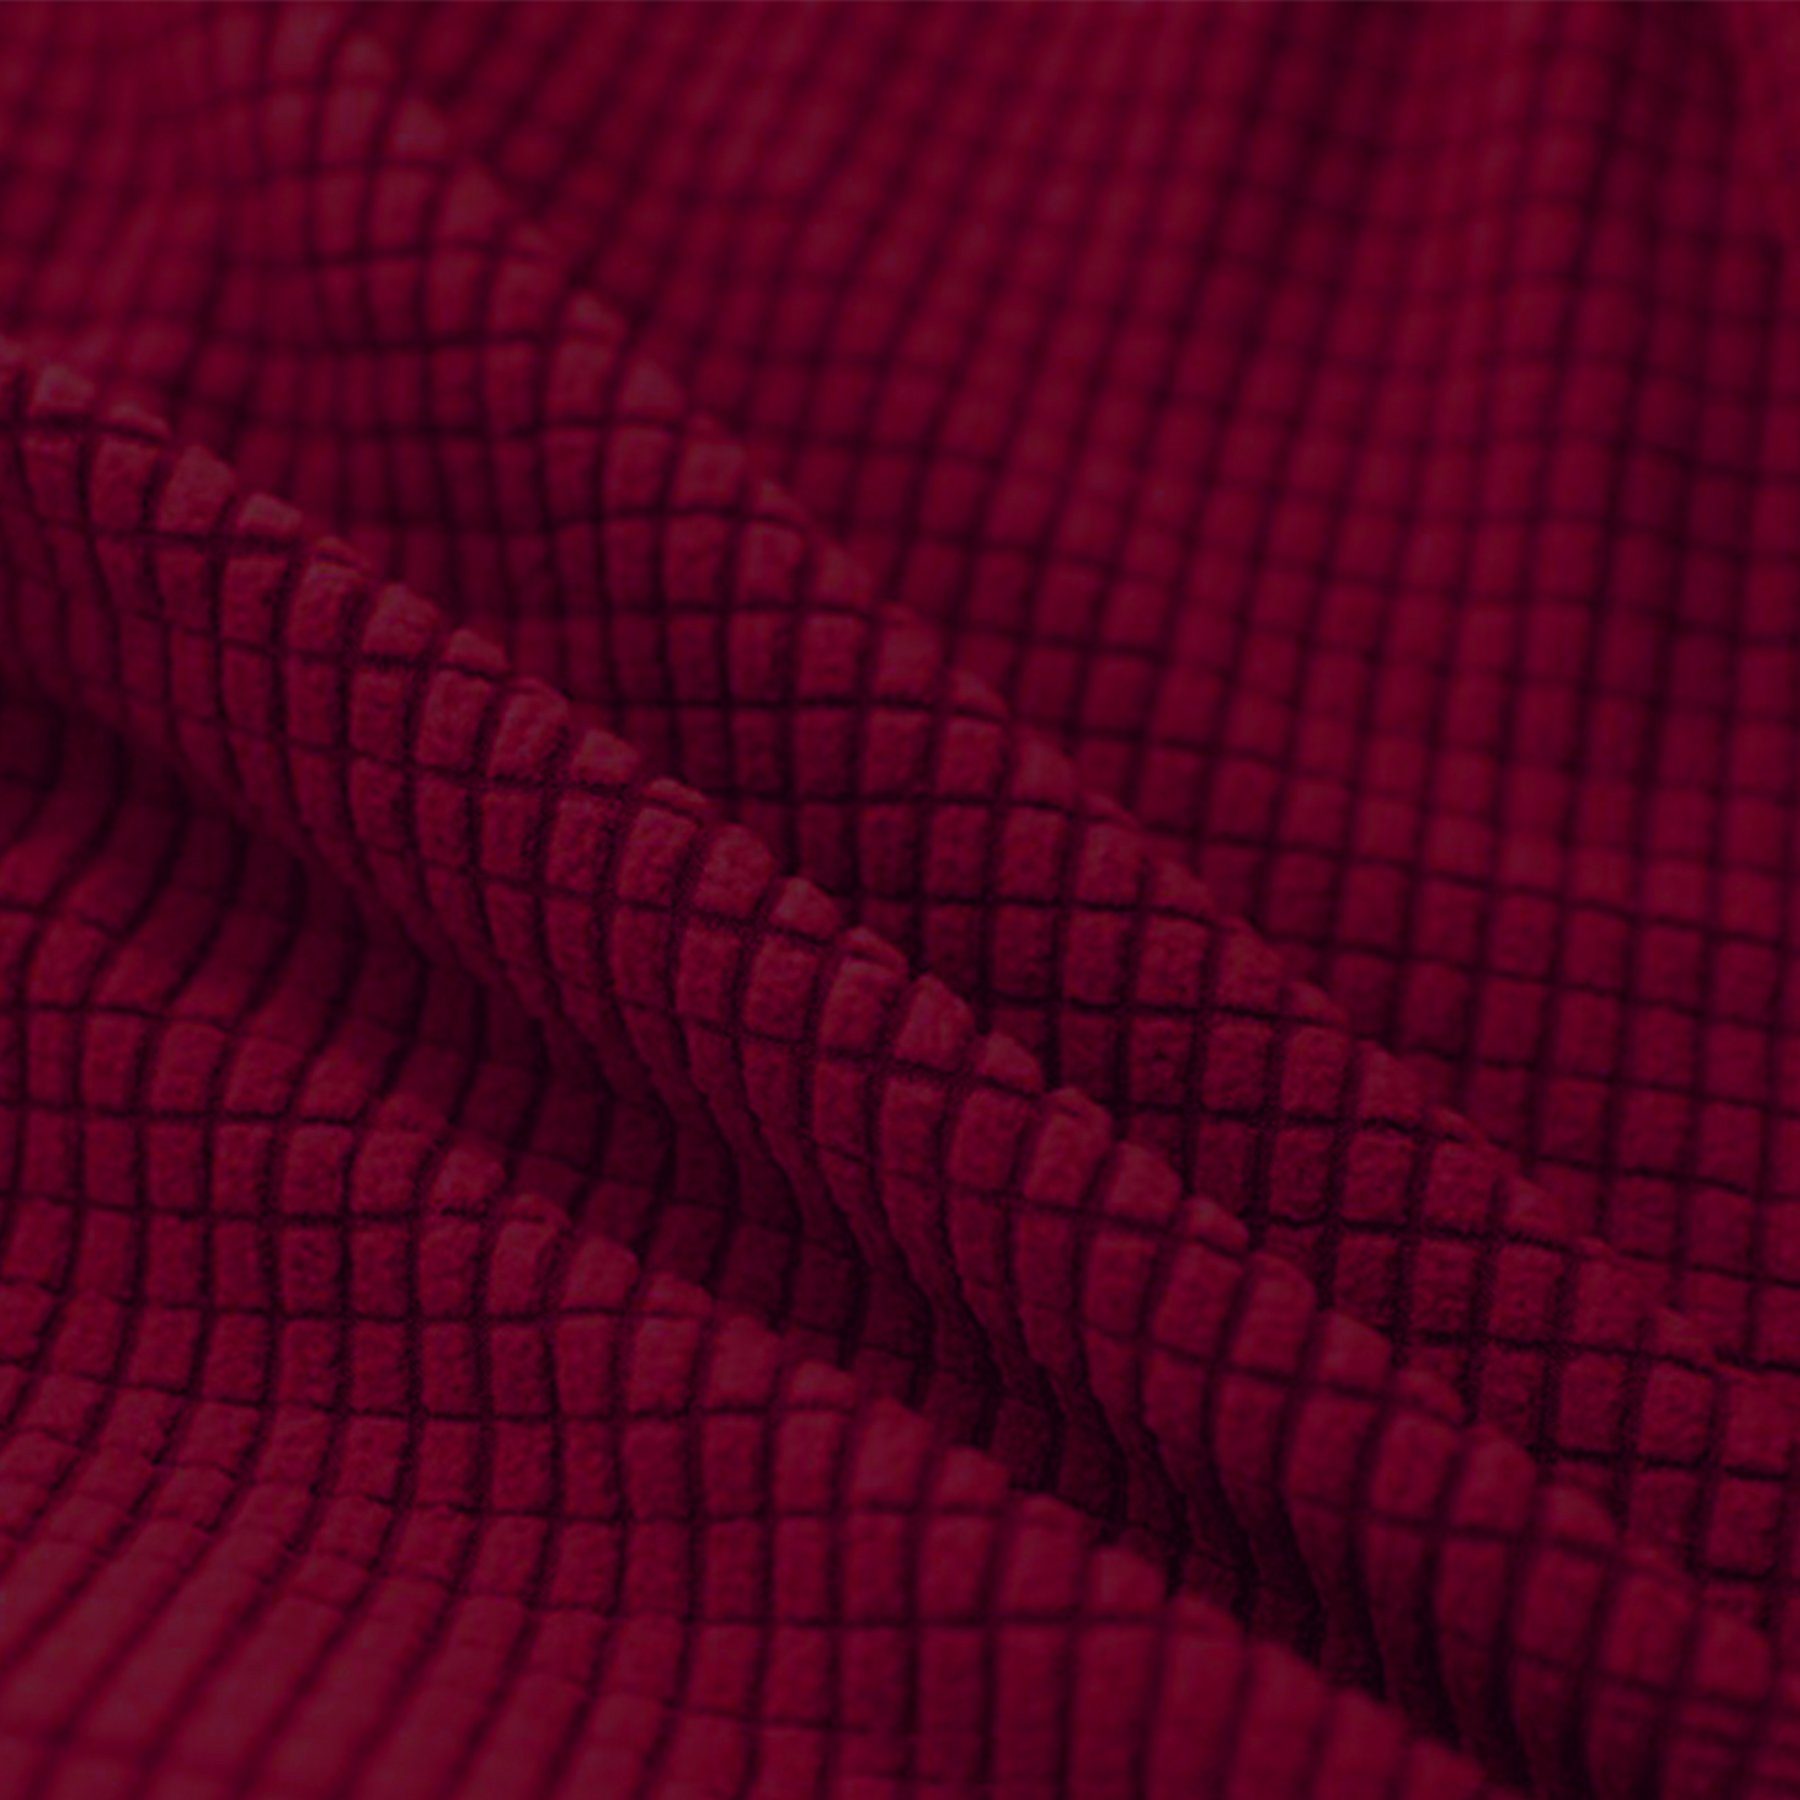 10er rot Stuhlbezug Set elastische, MOOHO Stuhlhusse Stretch Stuhlhussen Waschbar